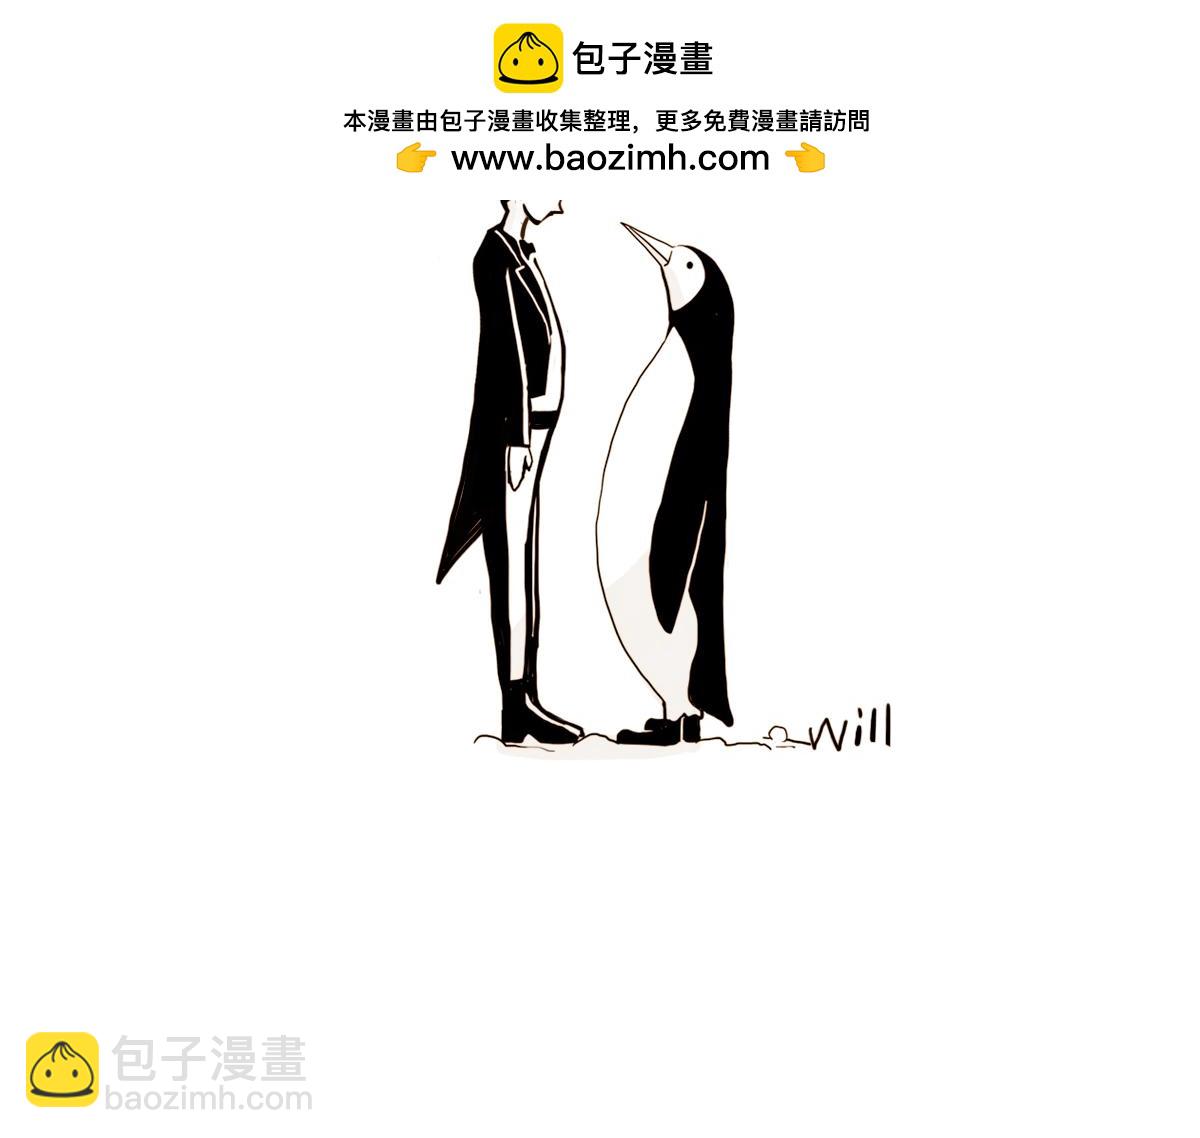 will體漫畫 - 失眠 - 2